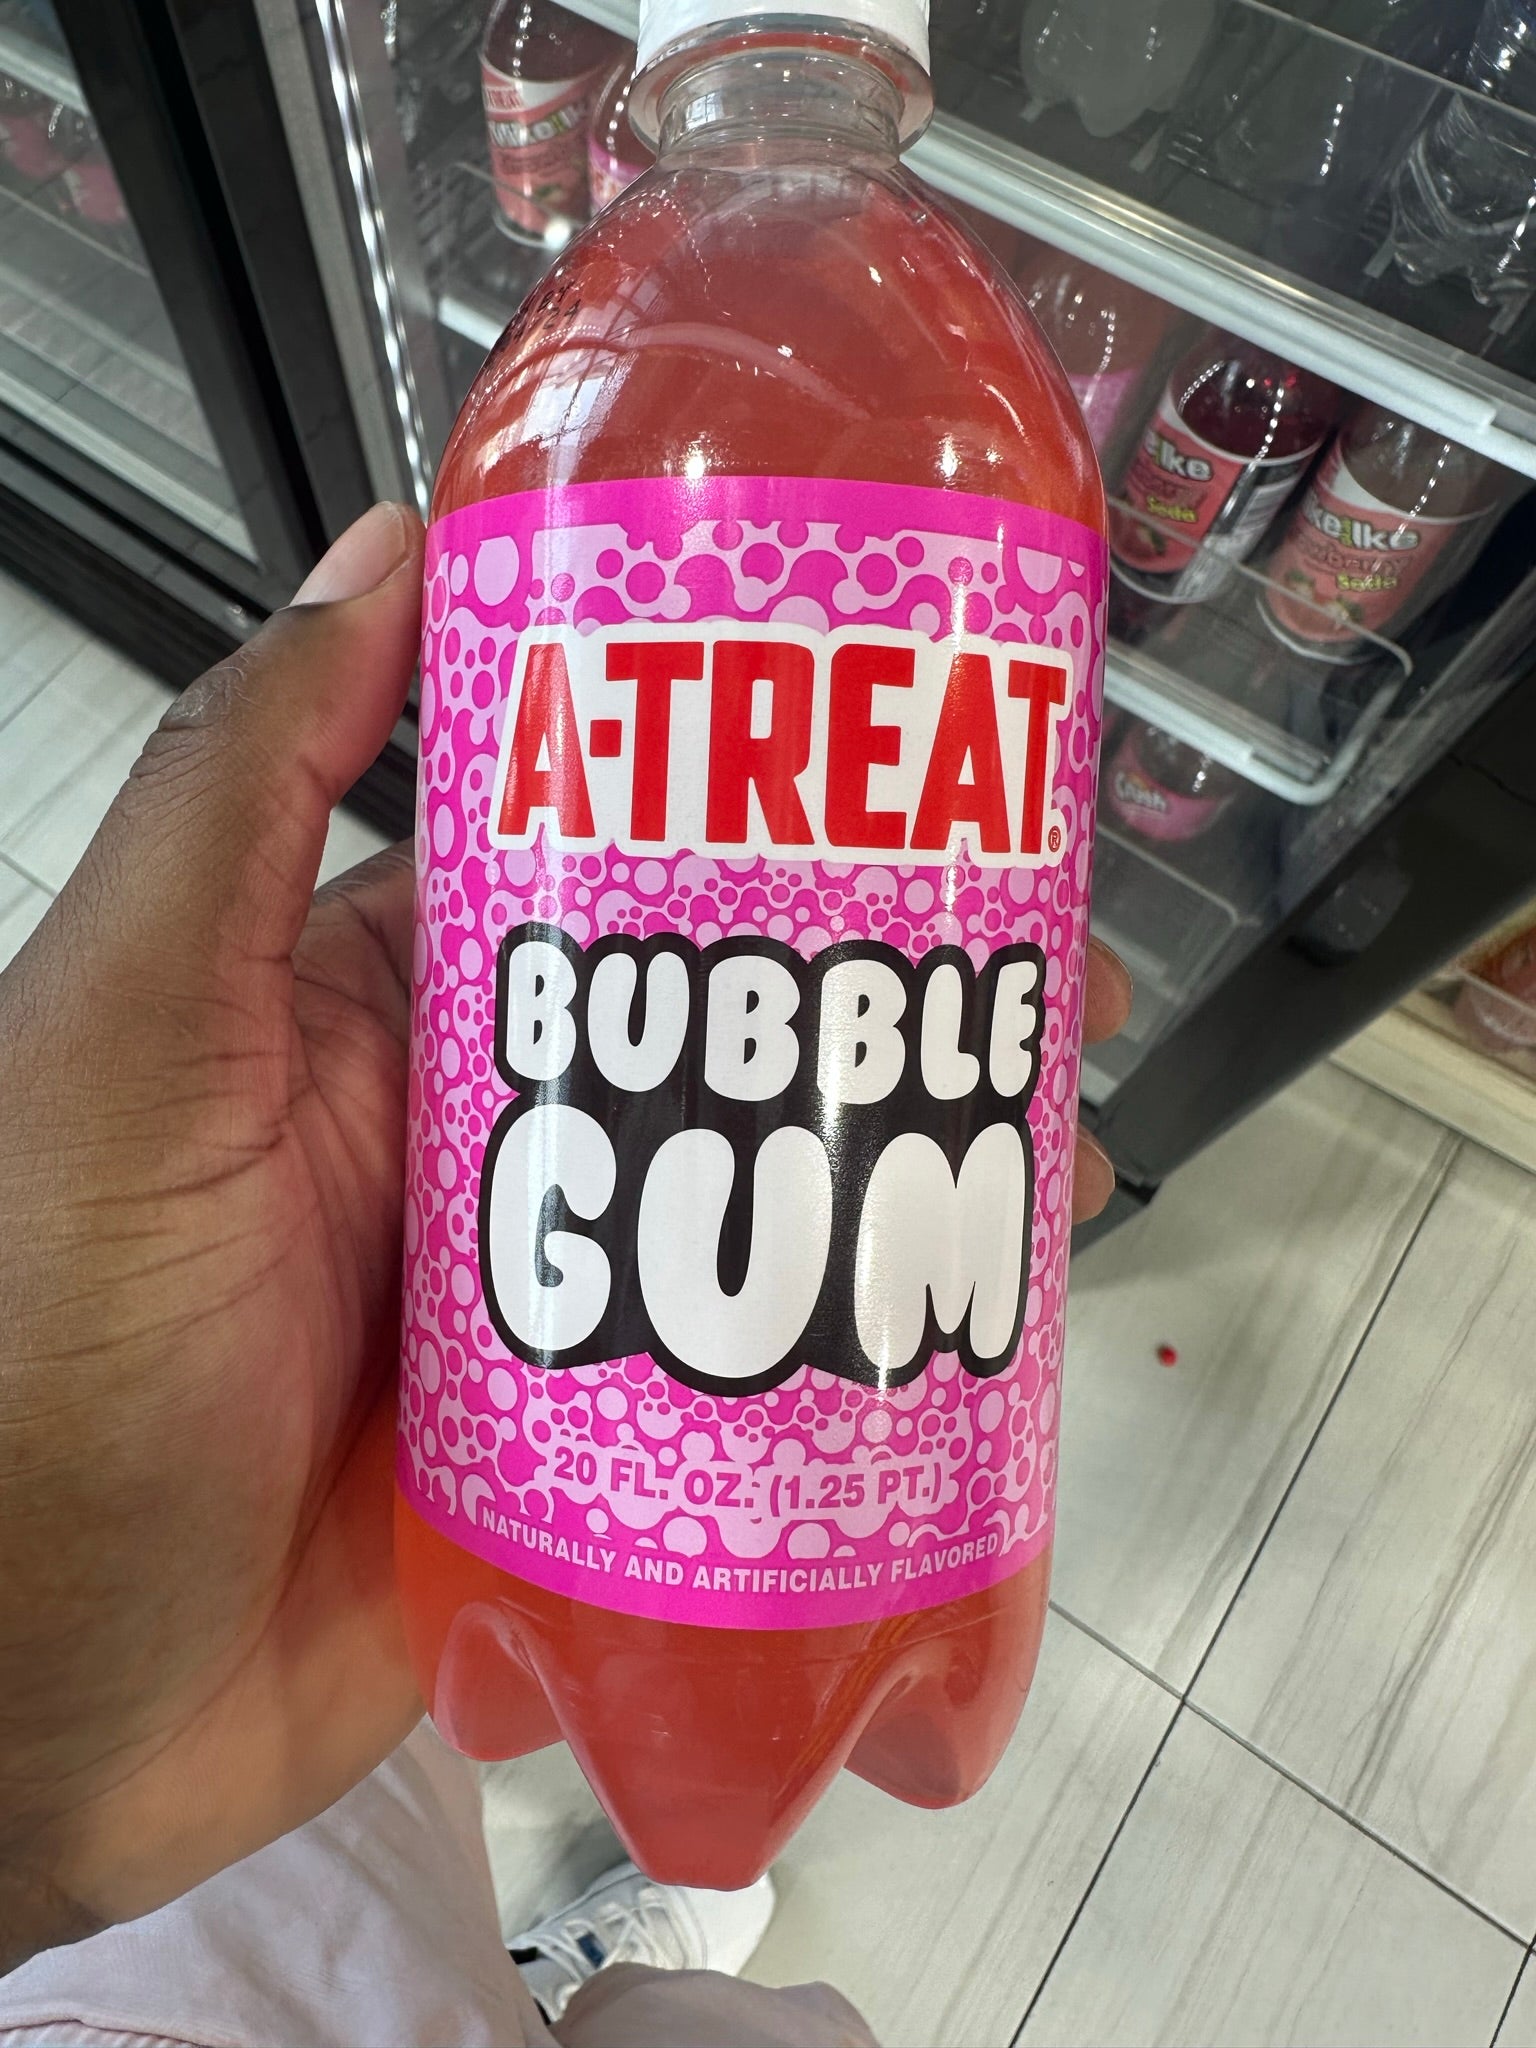 A-Treat Bubble Gum Soda